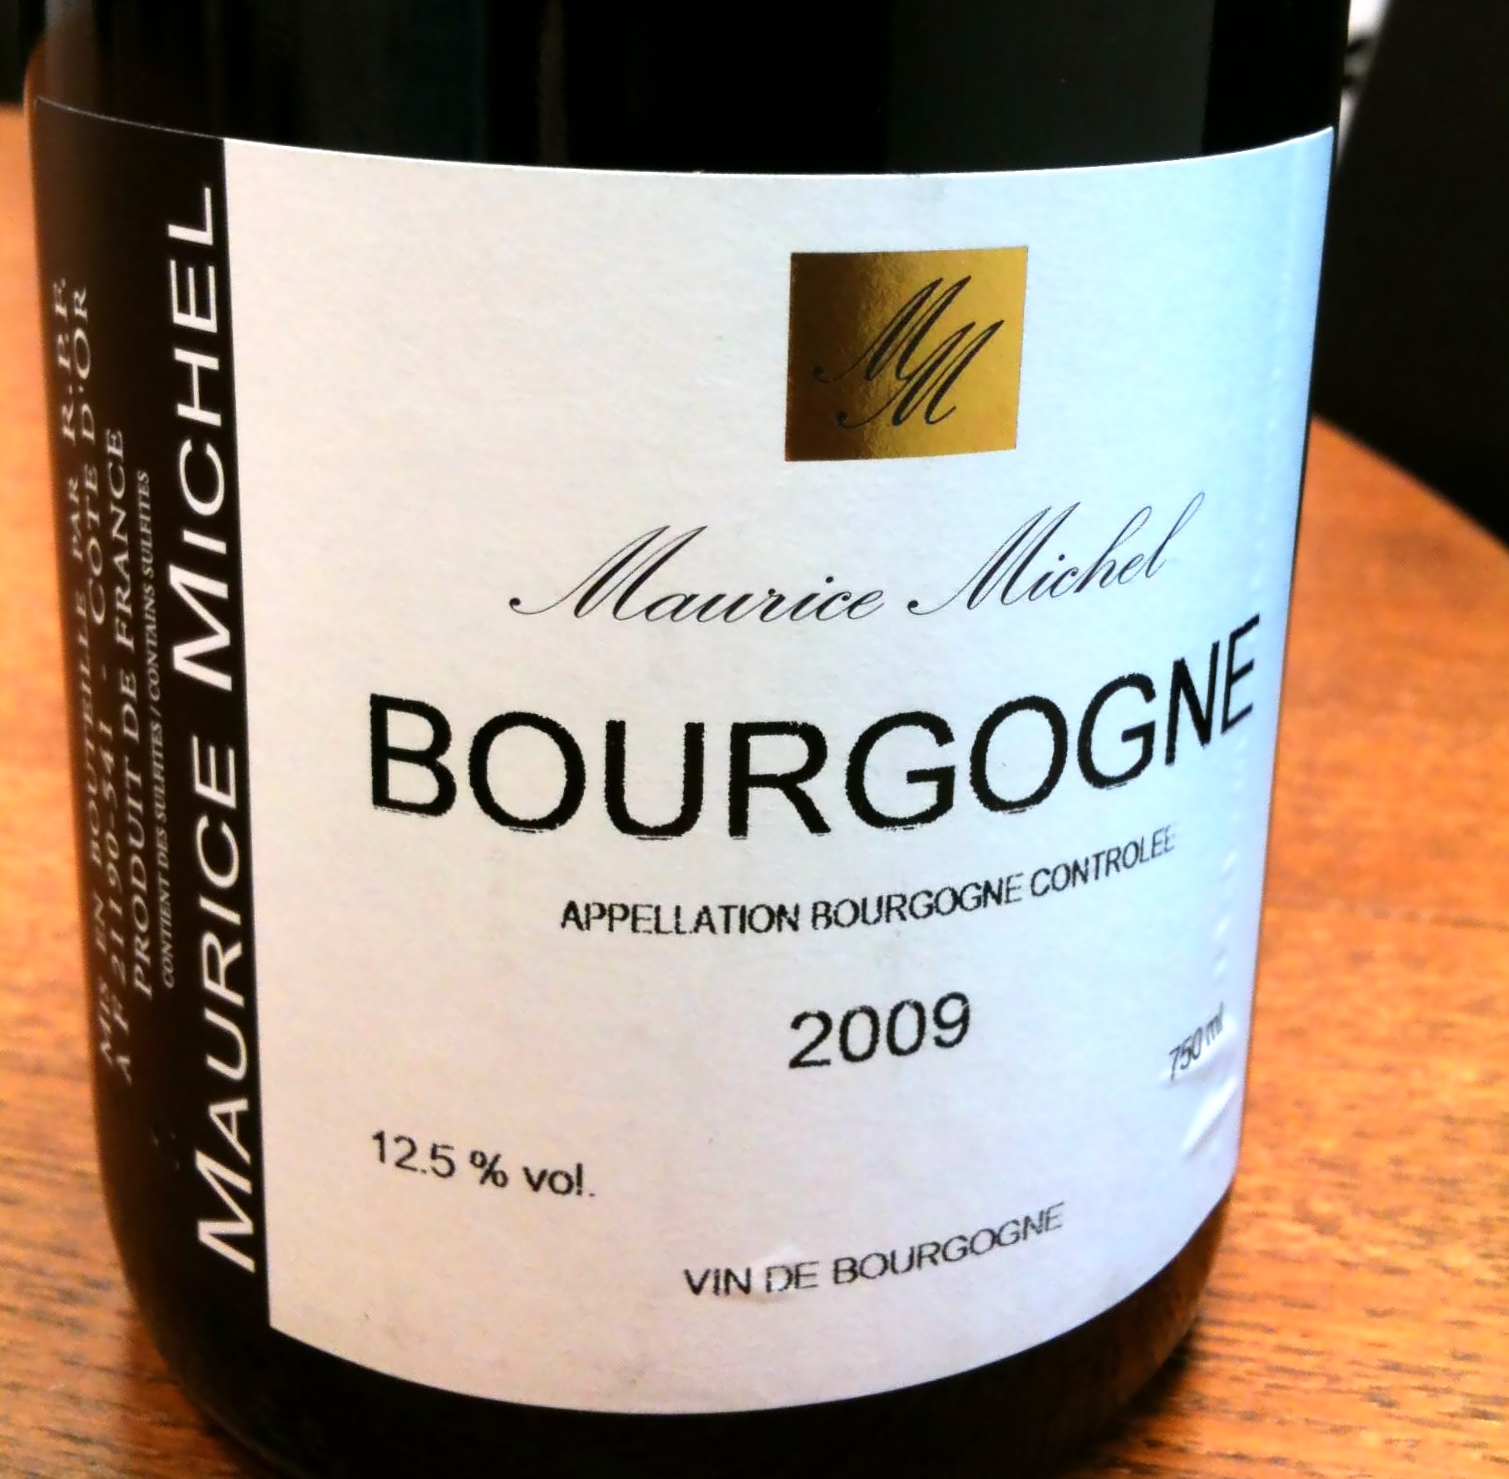 Maurice Michel Bourgogne Pinot Noir 2009